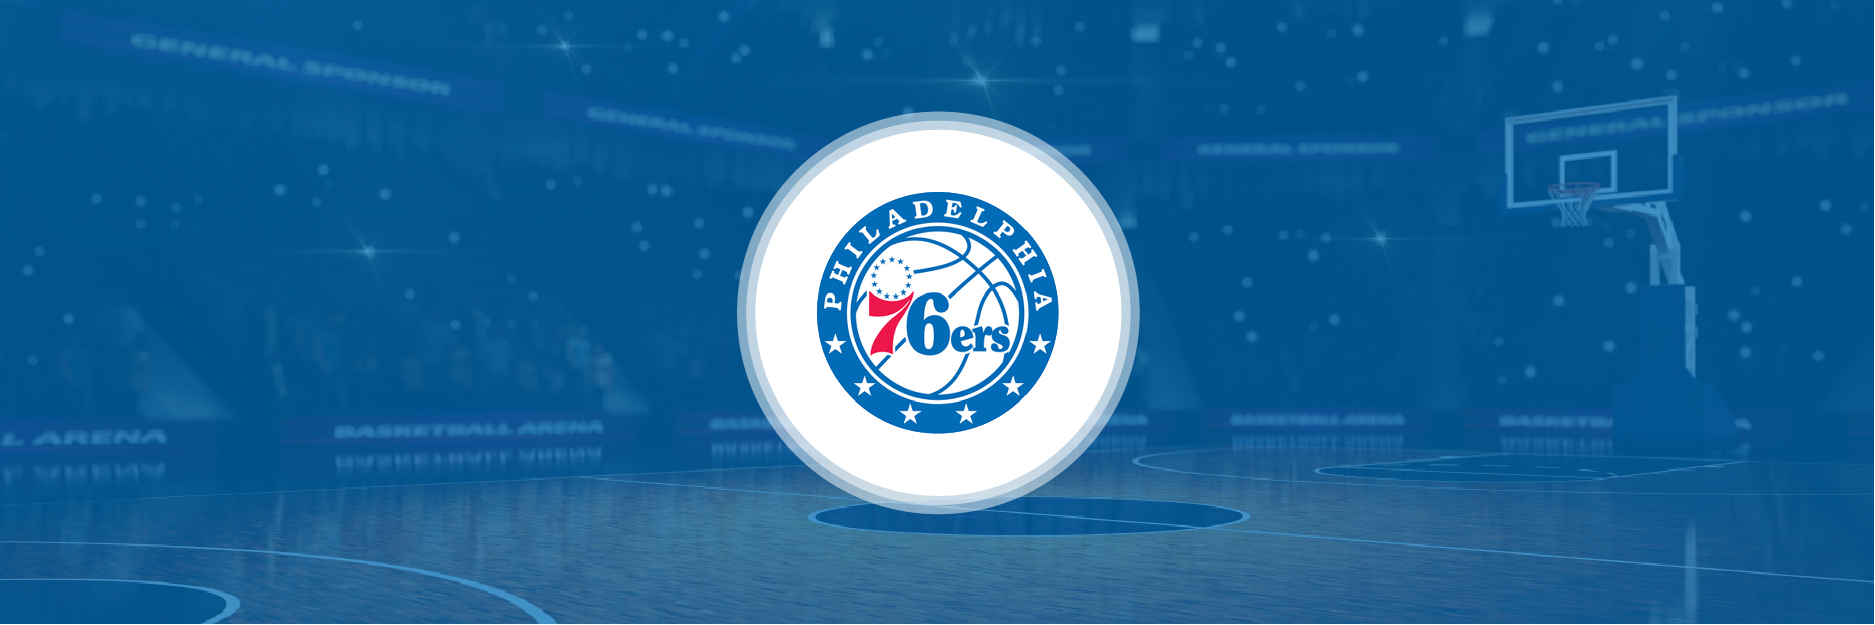 NBA Philadelphia 76ers 2020 Season Analysis